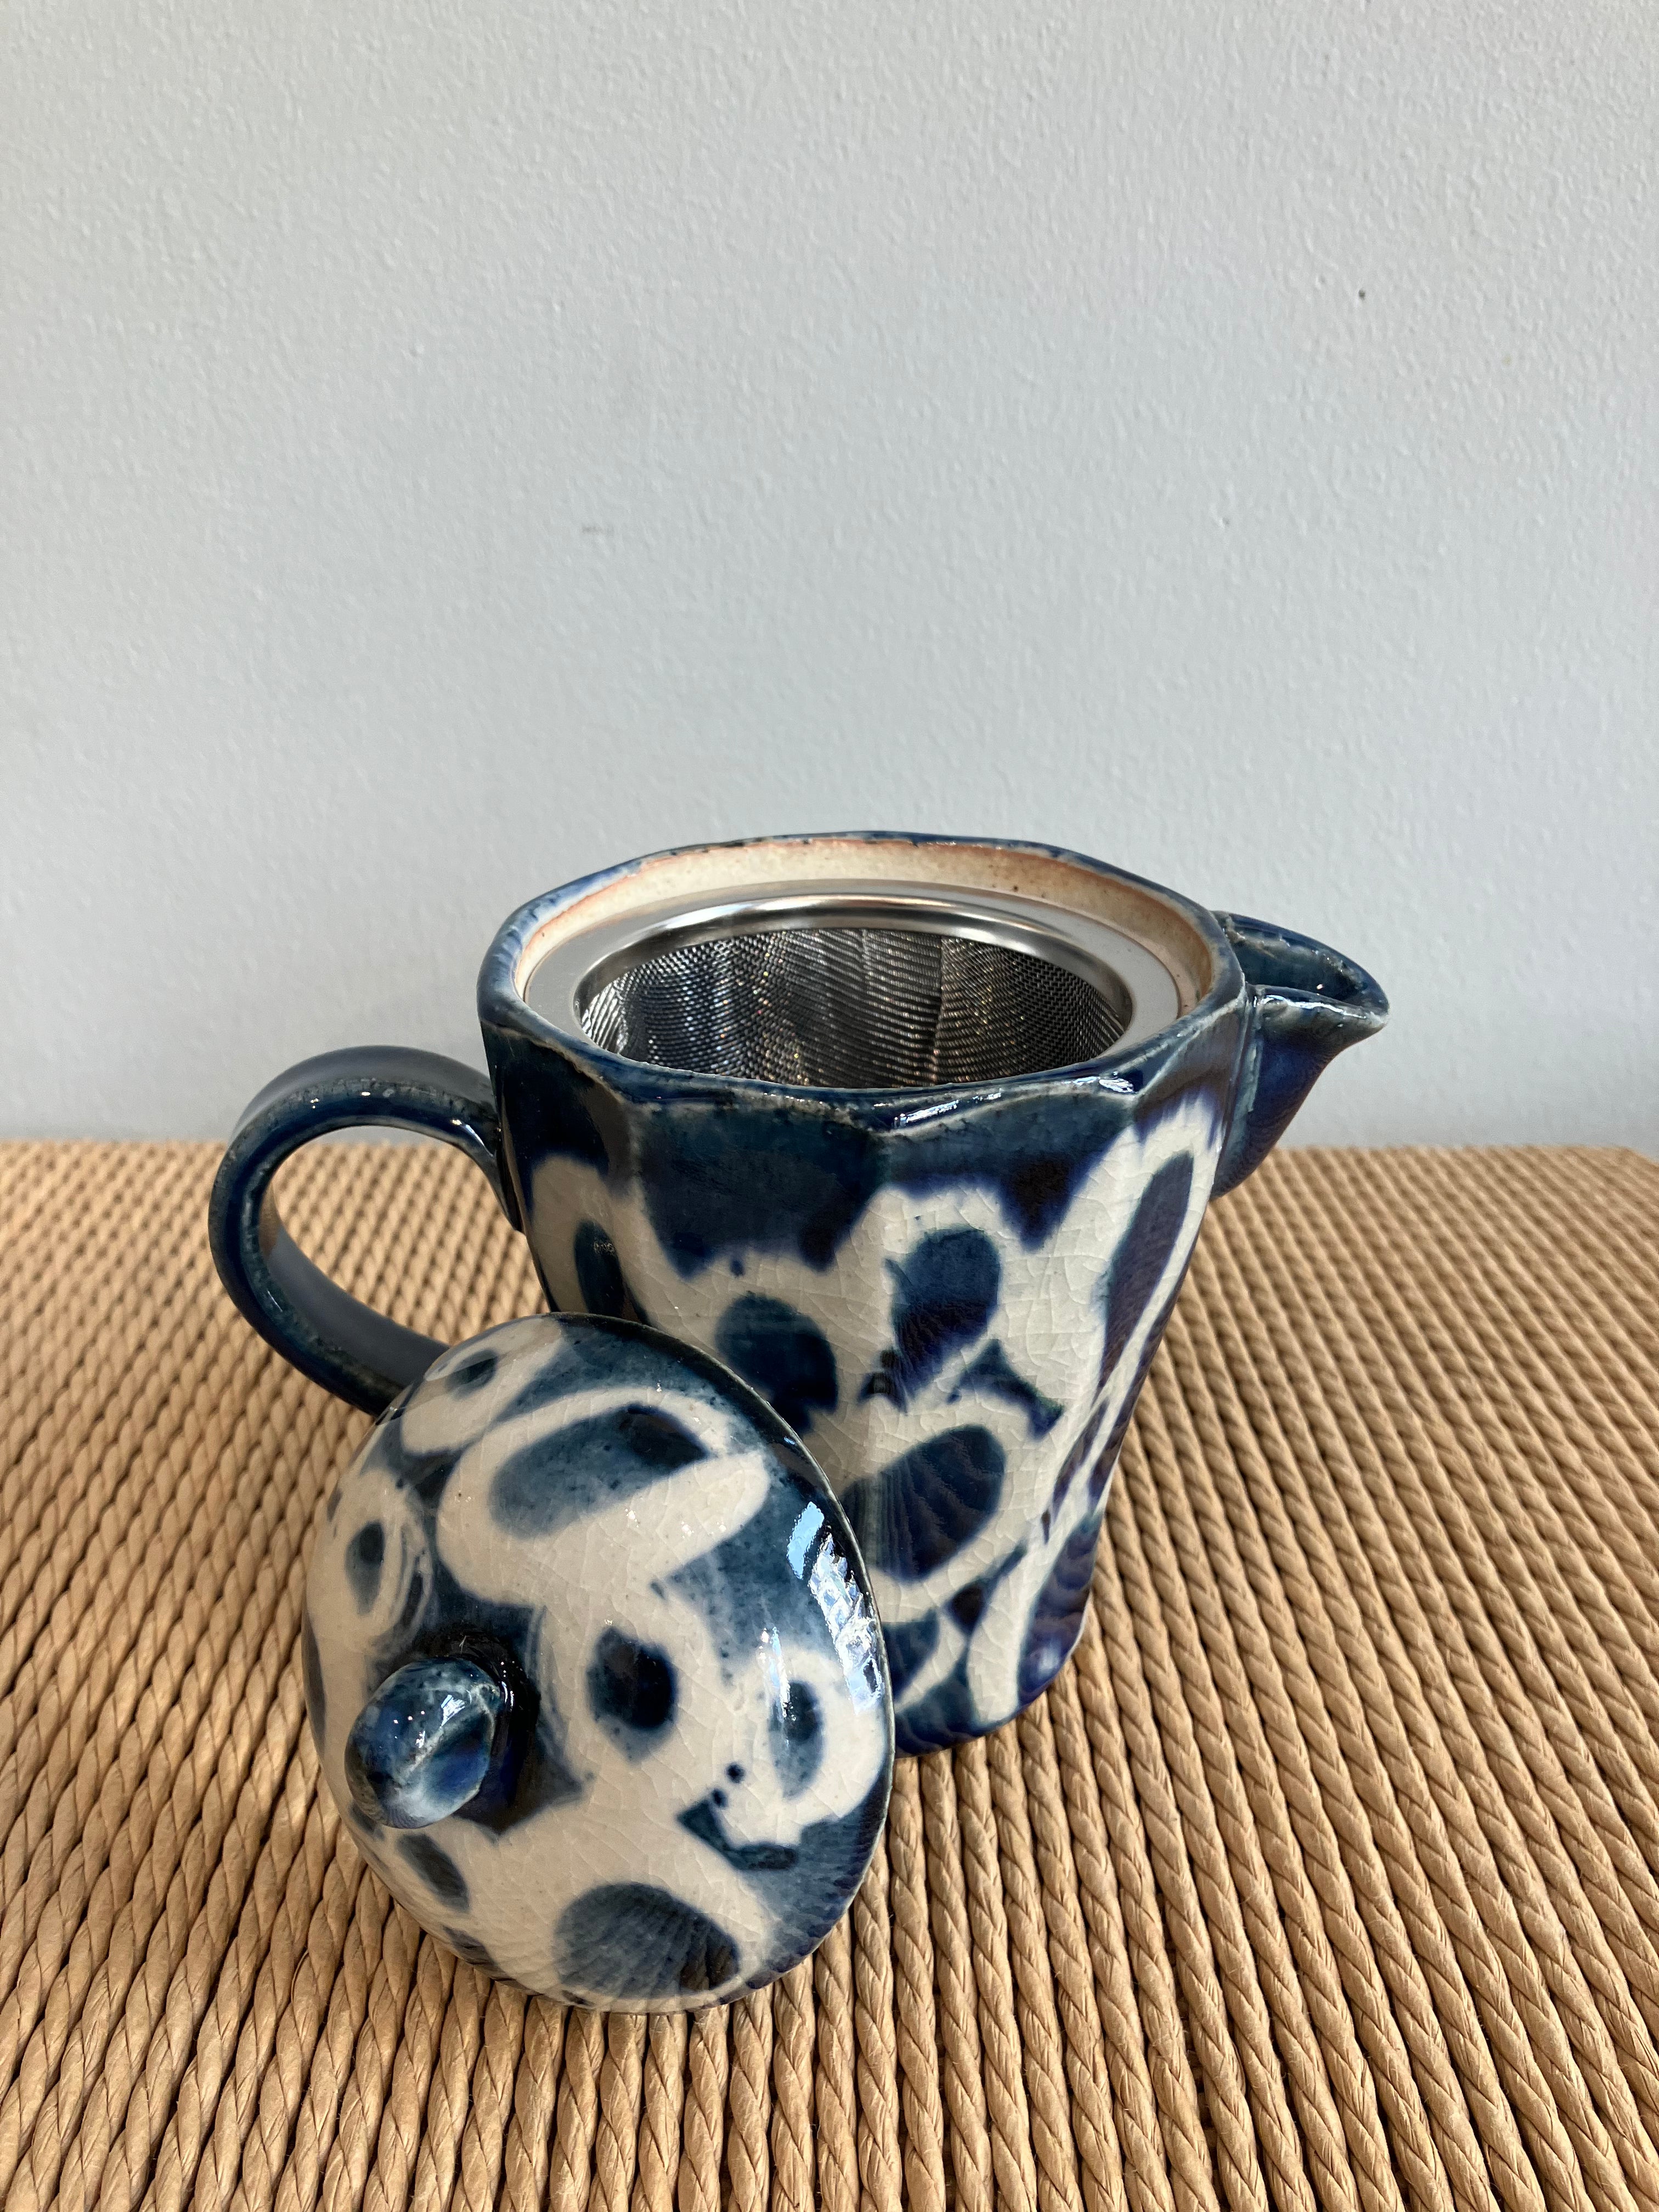 Small teapot with white circles